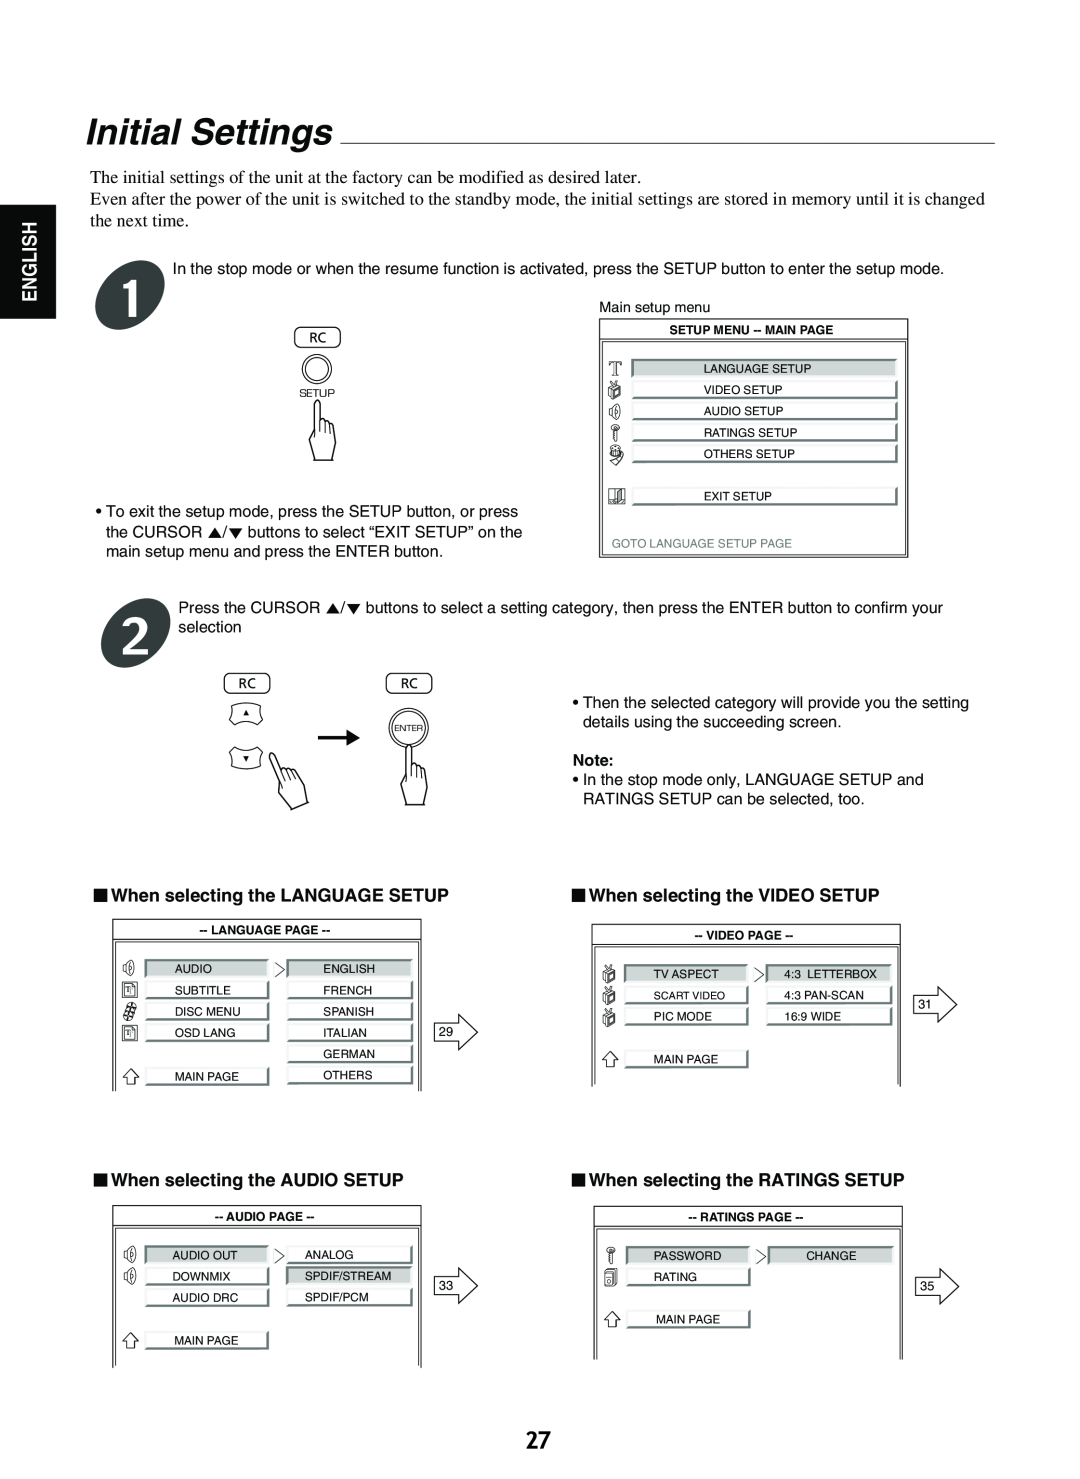 Sherwood V-903 manual Initial Settings, English, When selecting the LANGUAGE SETUP, When selecting the AUDIO SETUP 